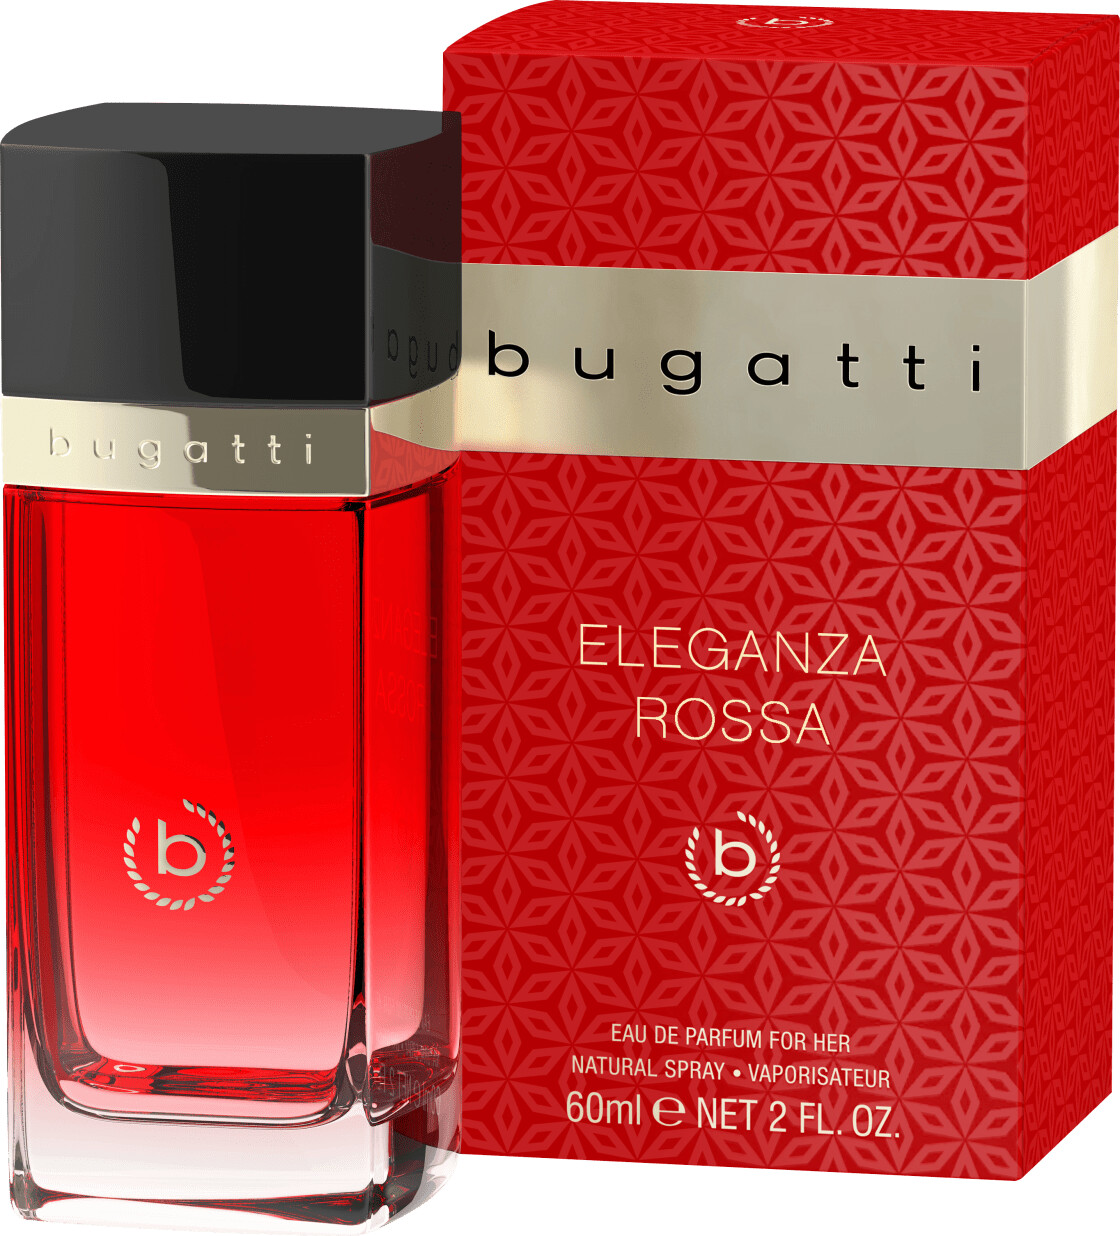 Eleganza ab 17,45 Bugatti | Preisvergleich Rossa (60ml) € Parfum bei de Eau